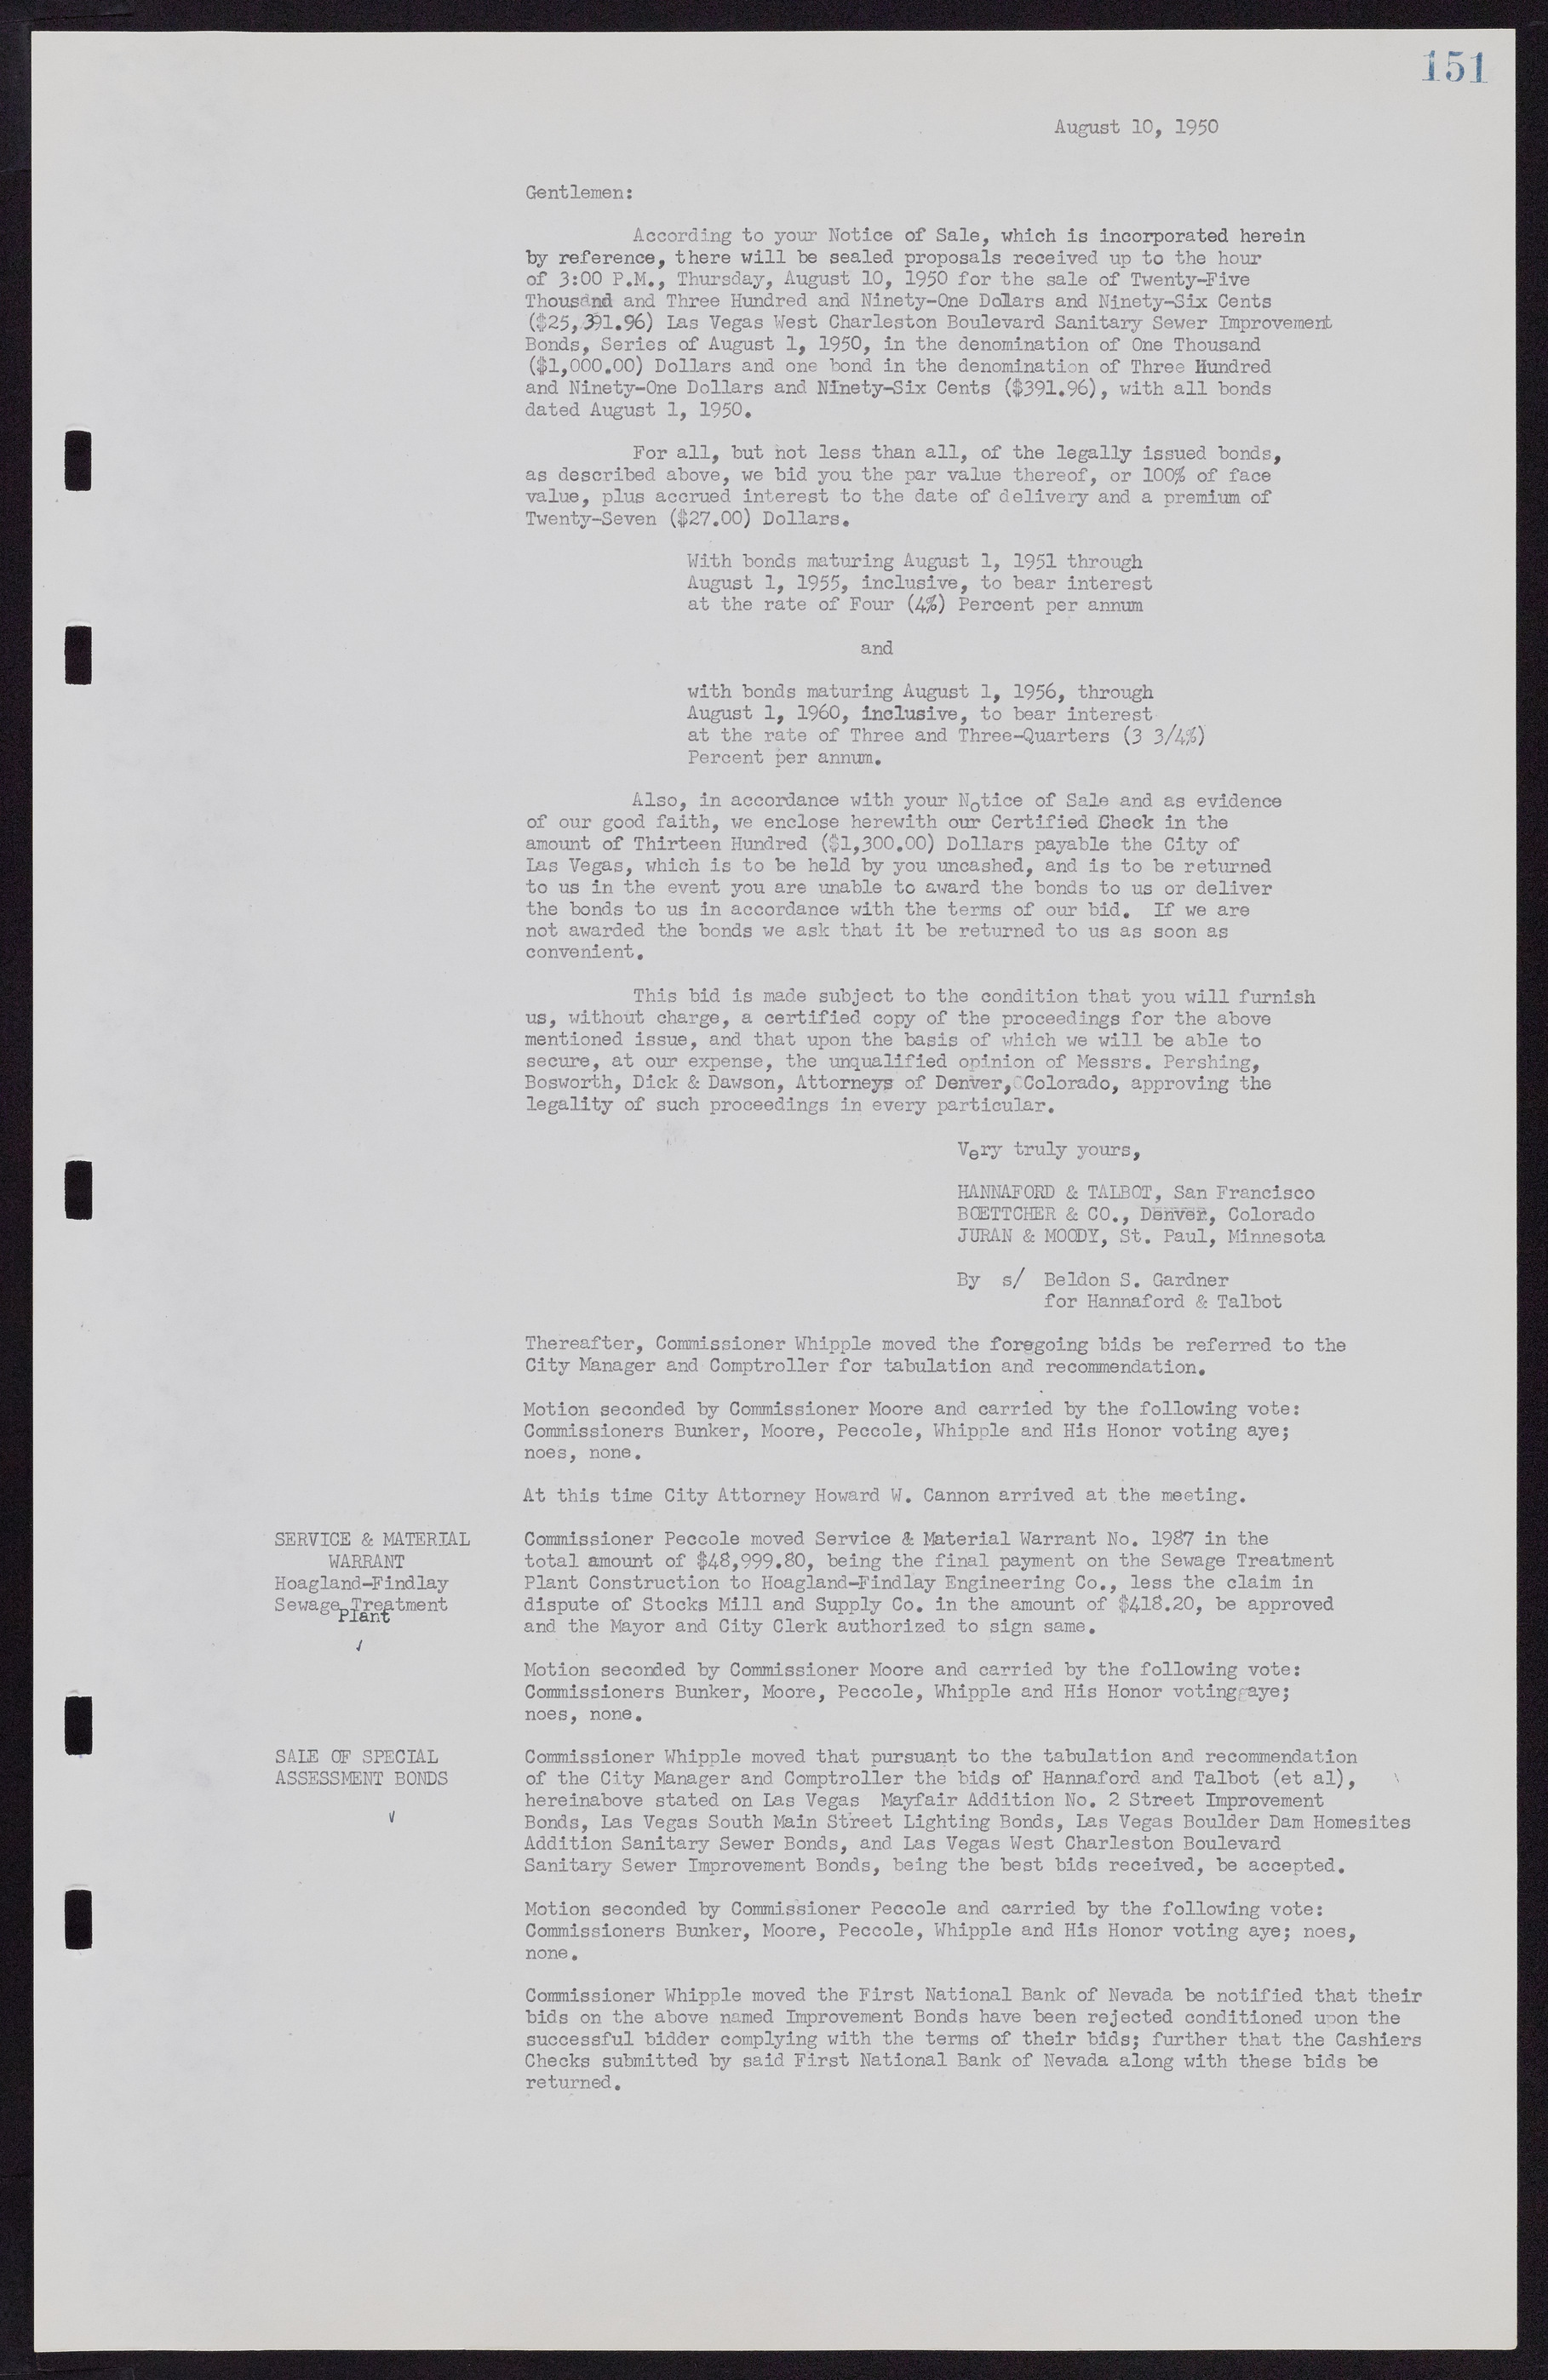 Las Vegas City Commission Minutes, November 7, 1949 to May 21, 1952, lvc000007-161